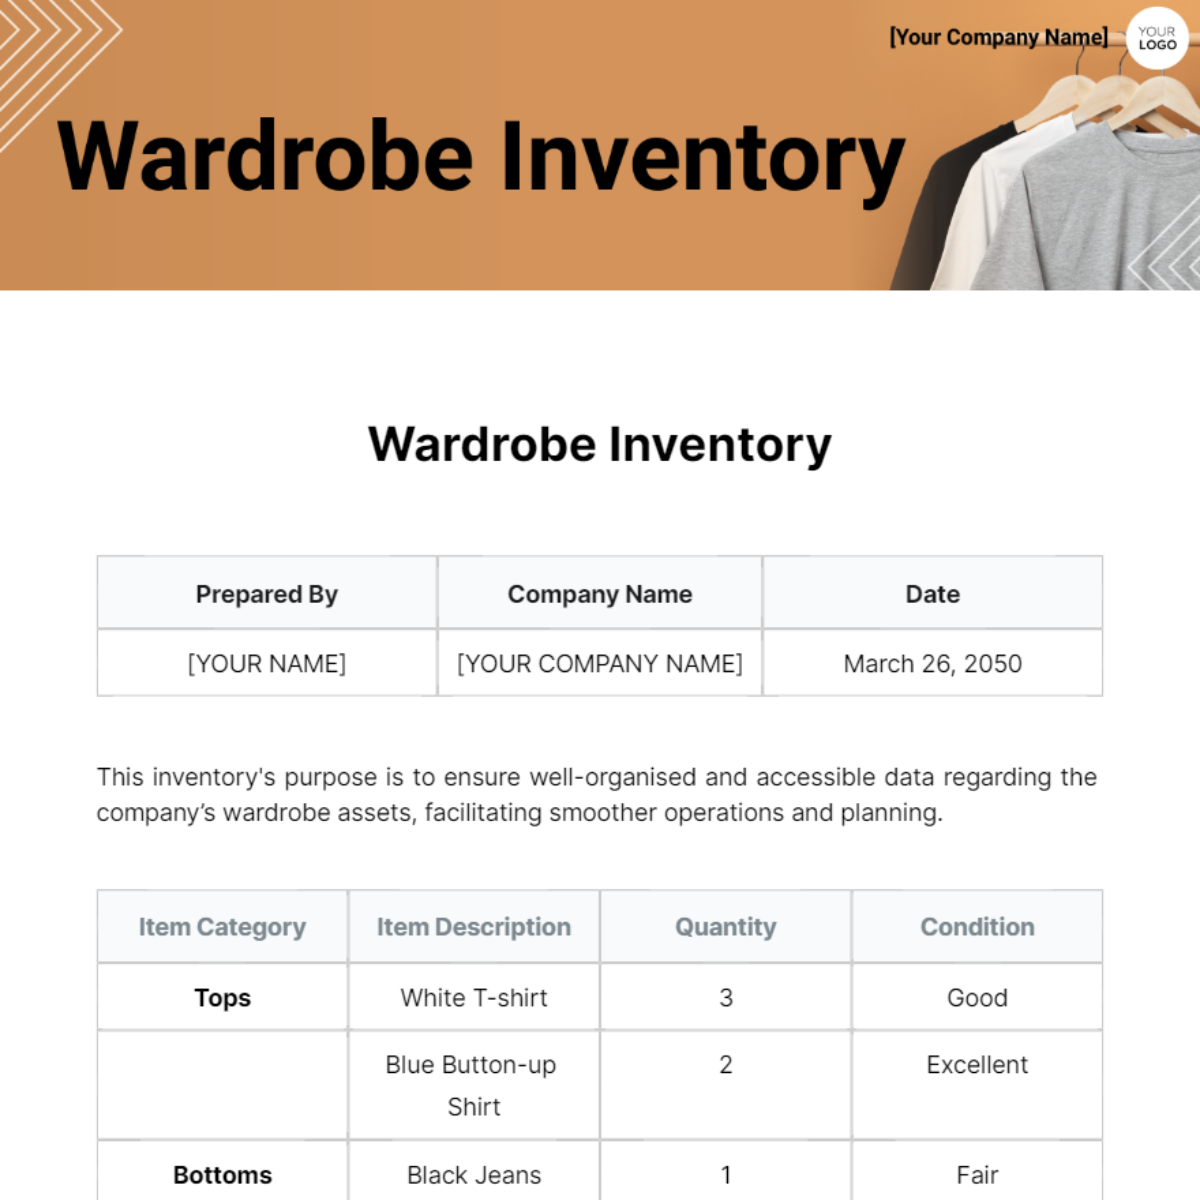 Wardrobe Inventory Template